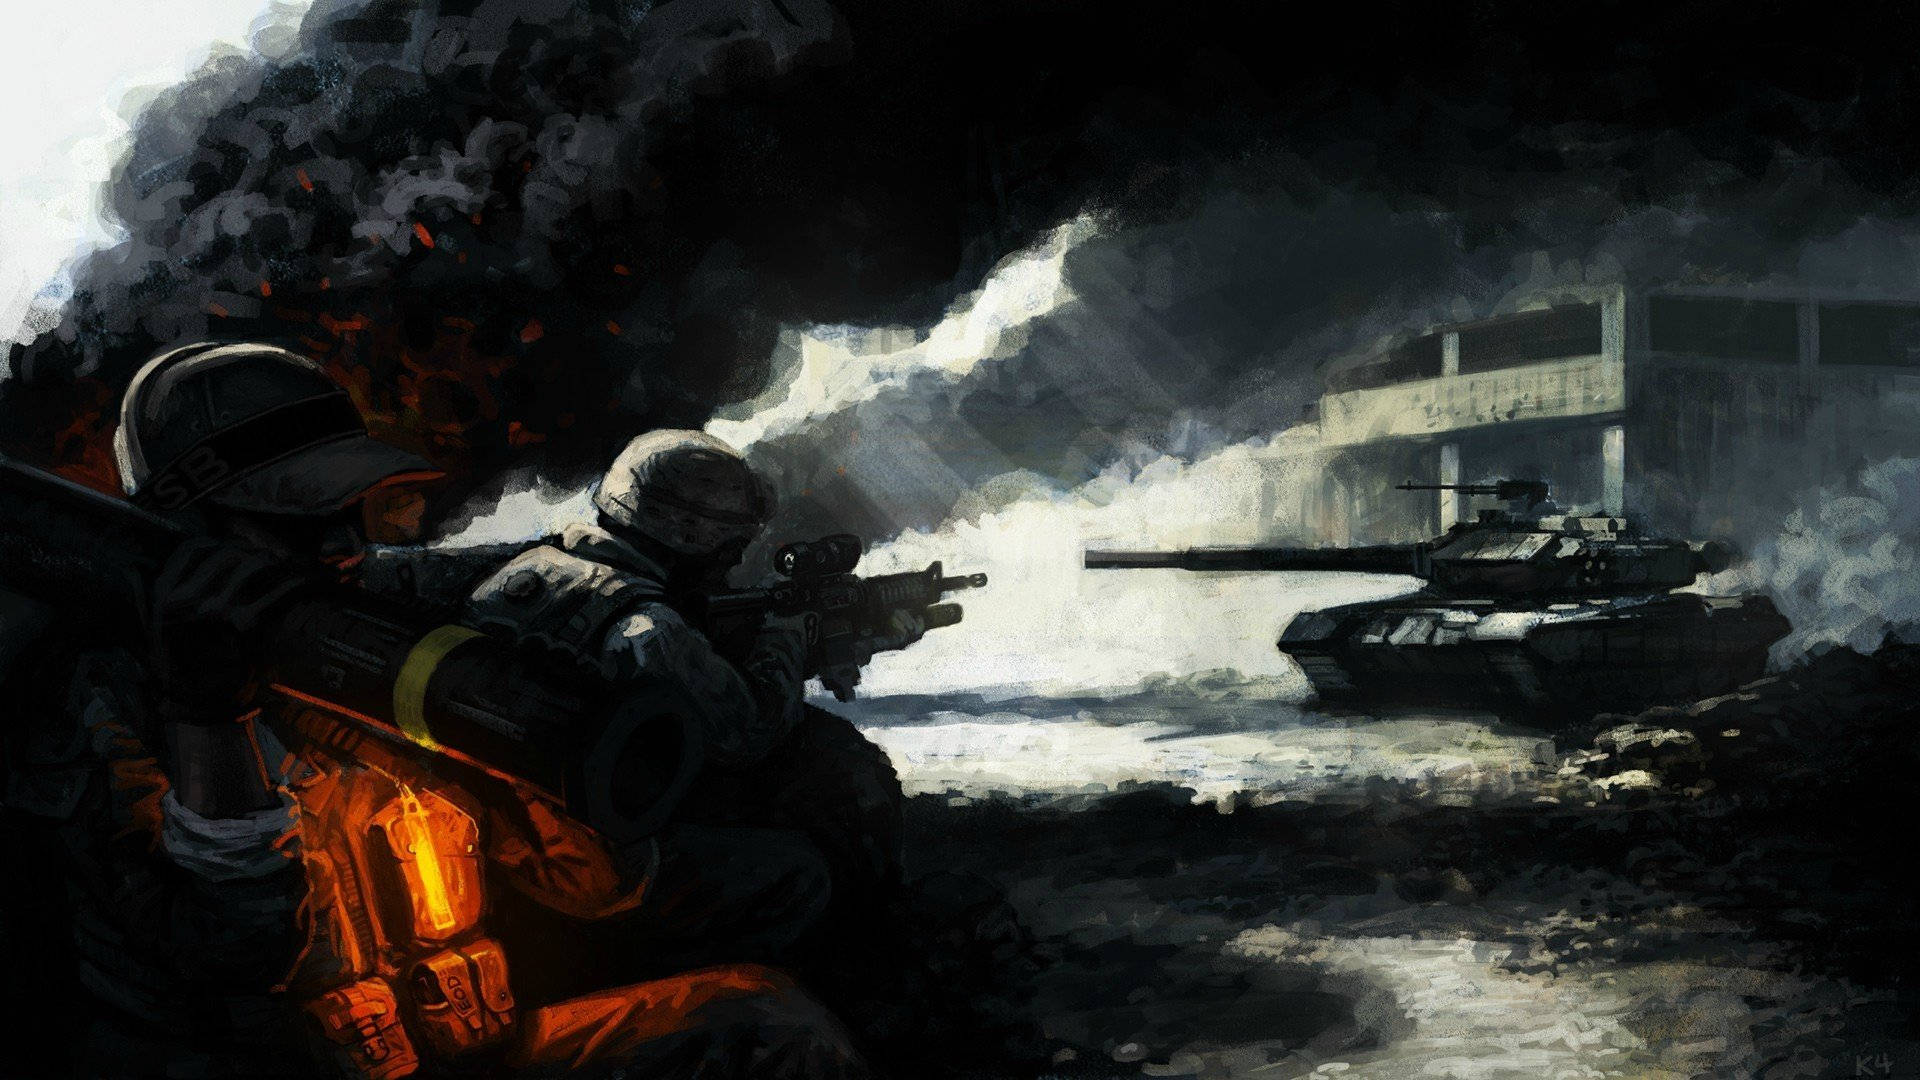 Epic Action in Battlefield 3 Wallpaper